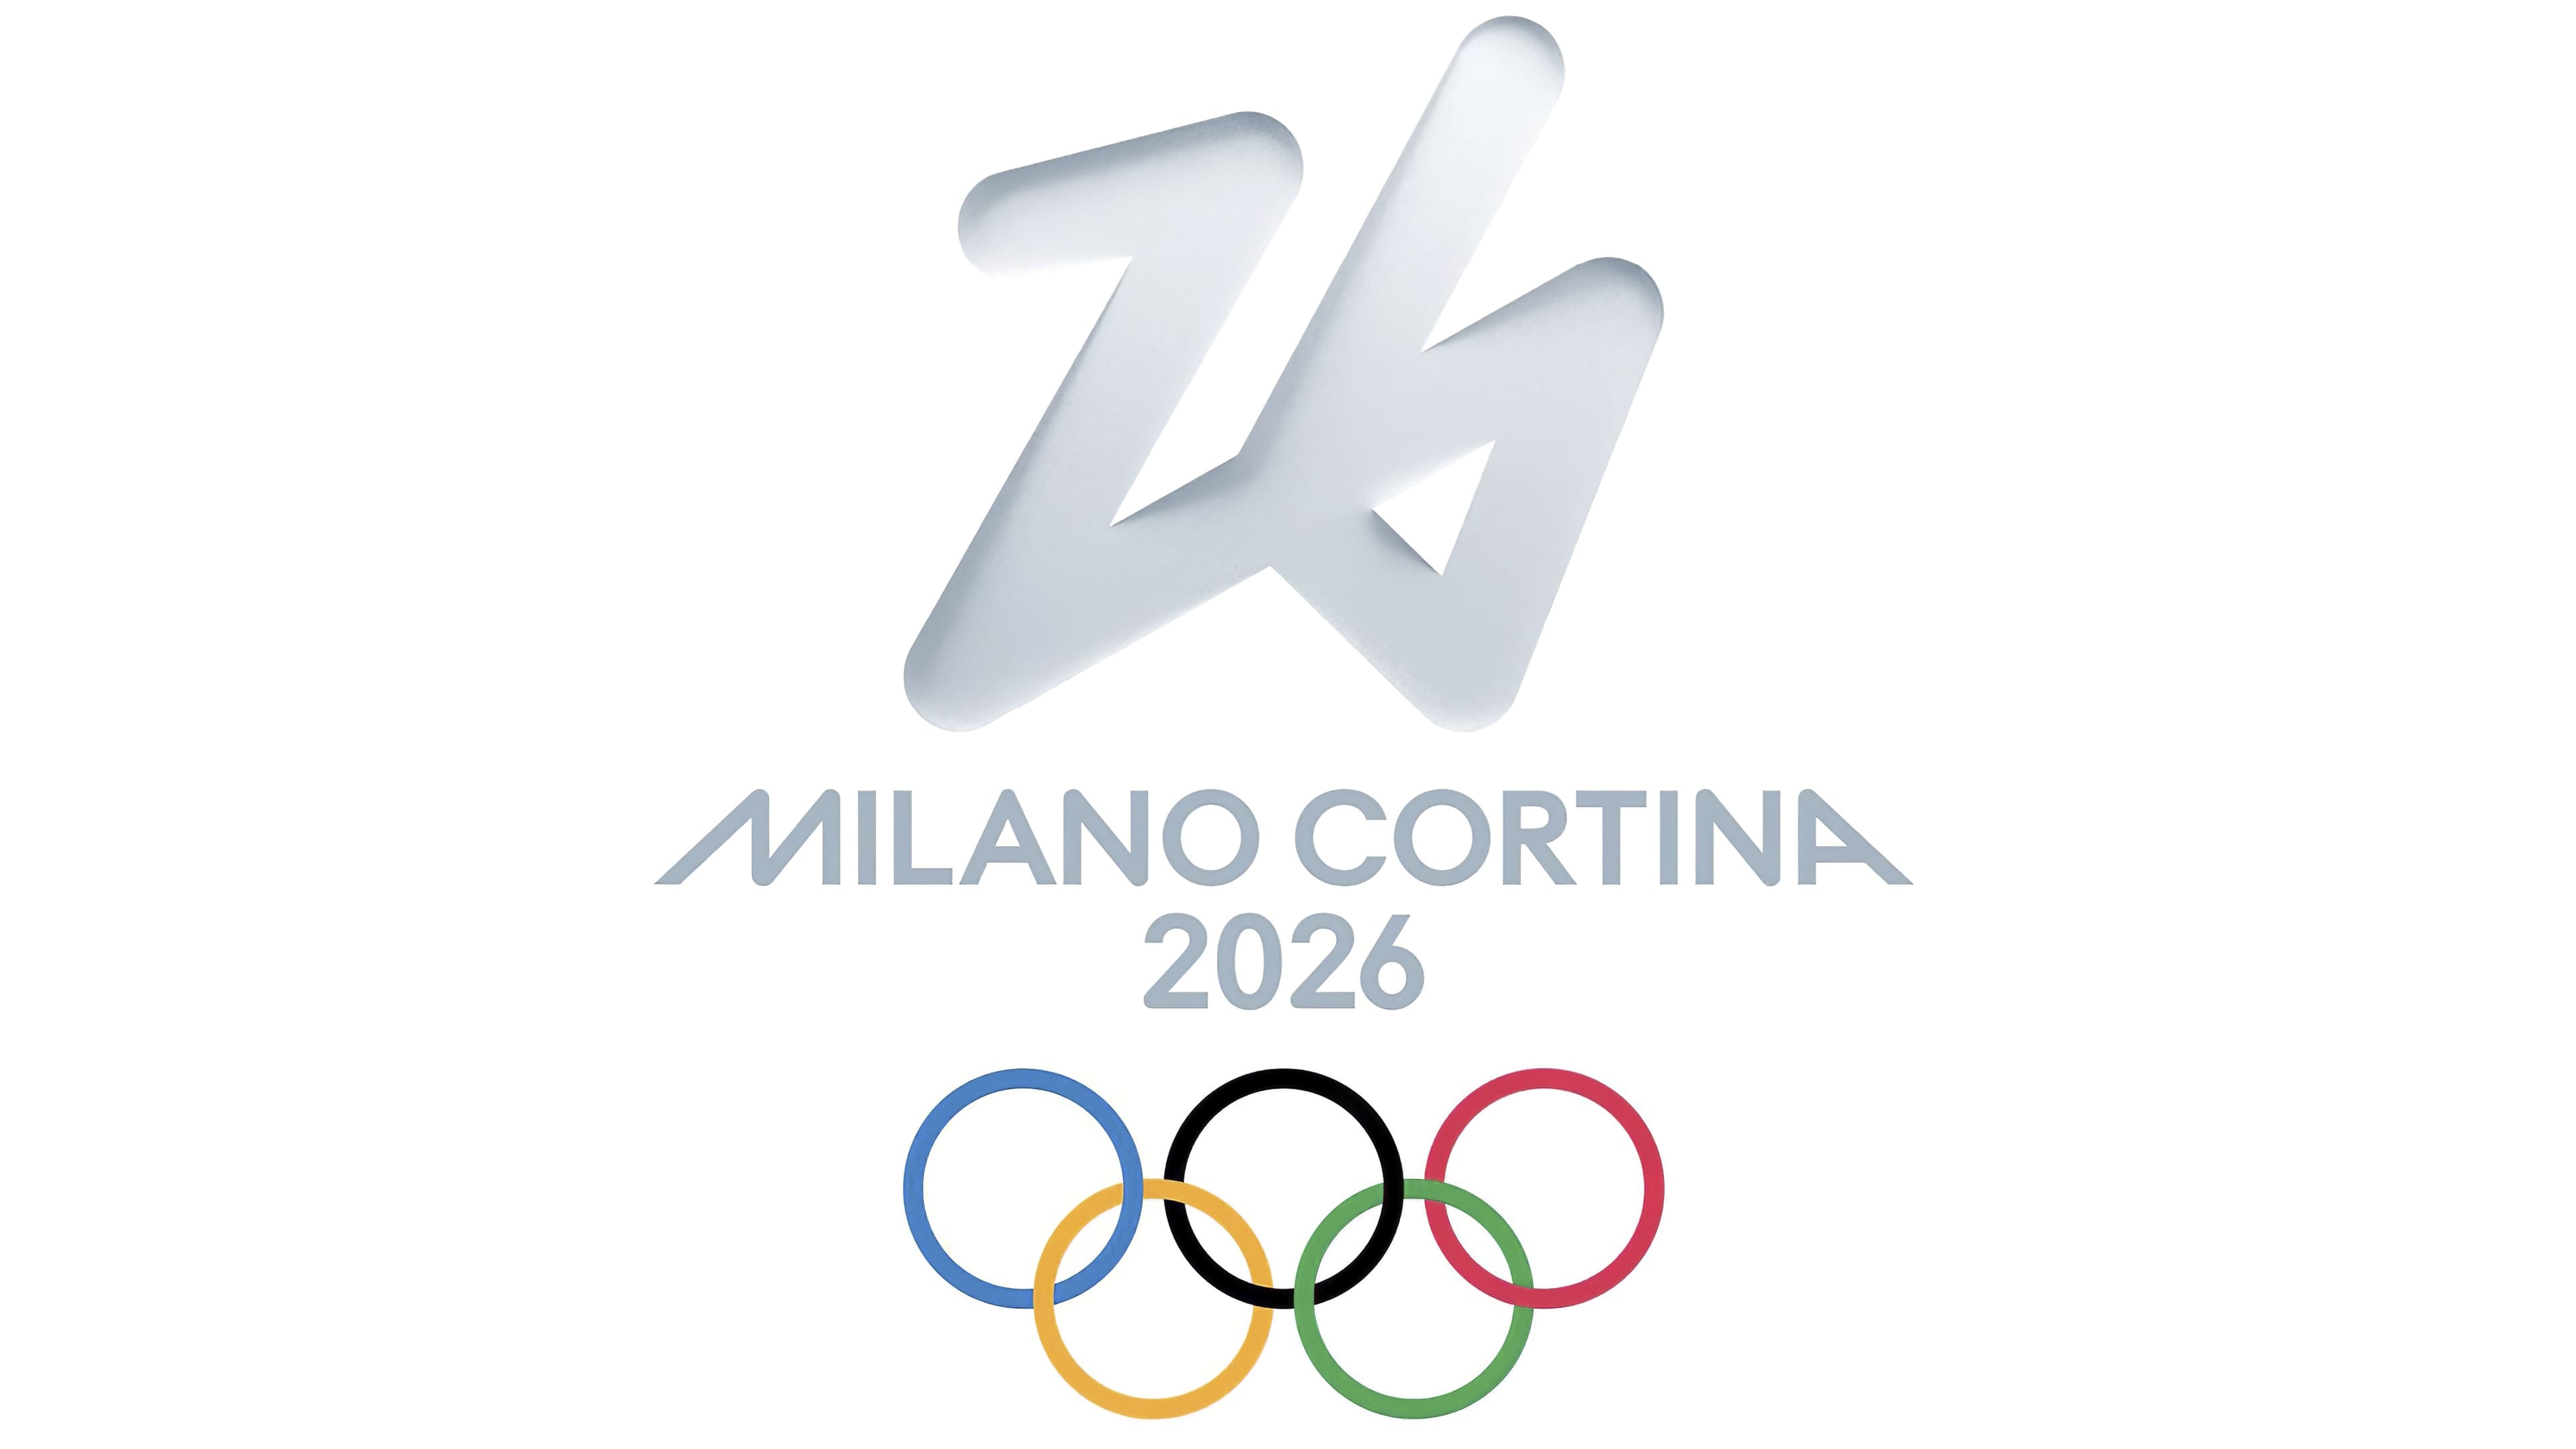 Olympics: 2026 Winter Olympics, Milano Cortina 2026, An upcoming international multi-sport event. 3840x2160 4K Wallpaper.